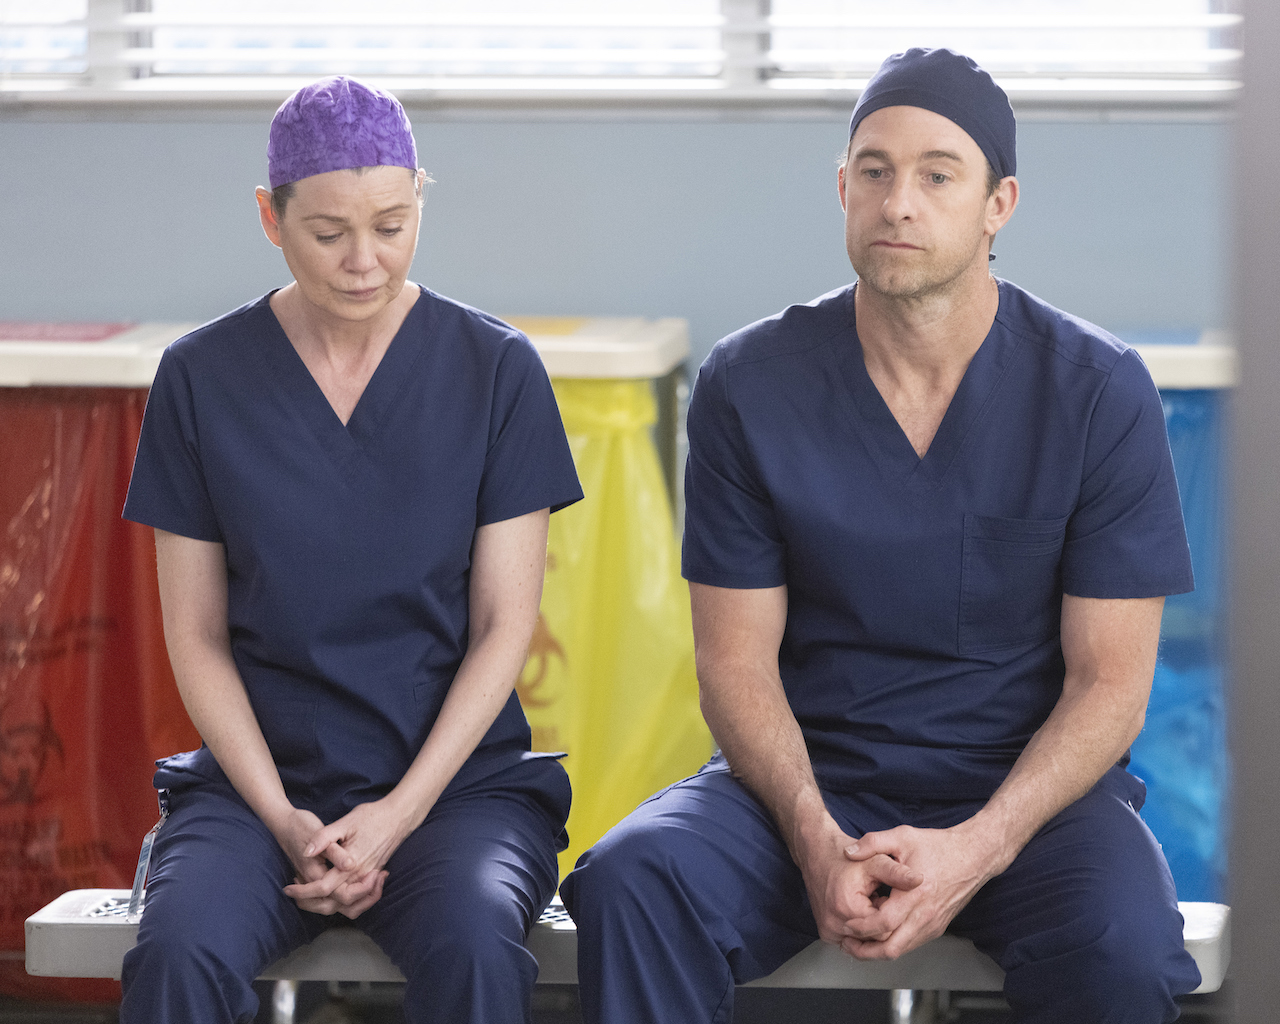 Ellen Pompeo as Meredith Grey and Scott Speedman as Nick Marsh sit next to each other in blue scrubs on 'Grey's Anatomy'.